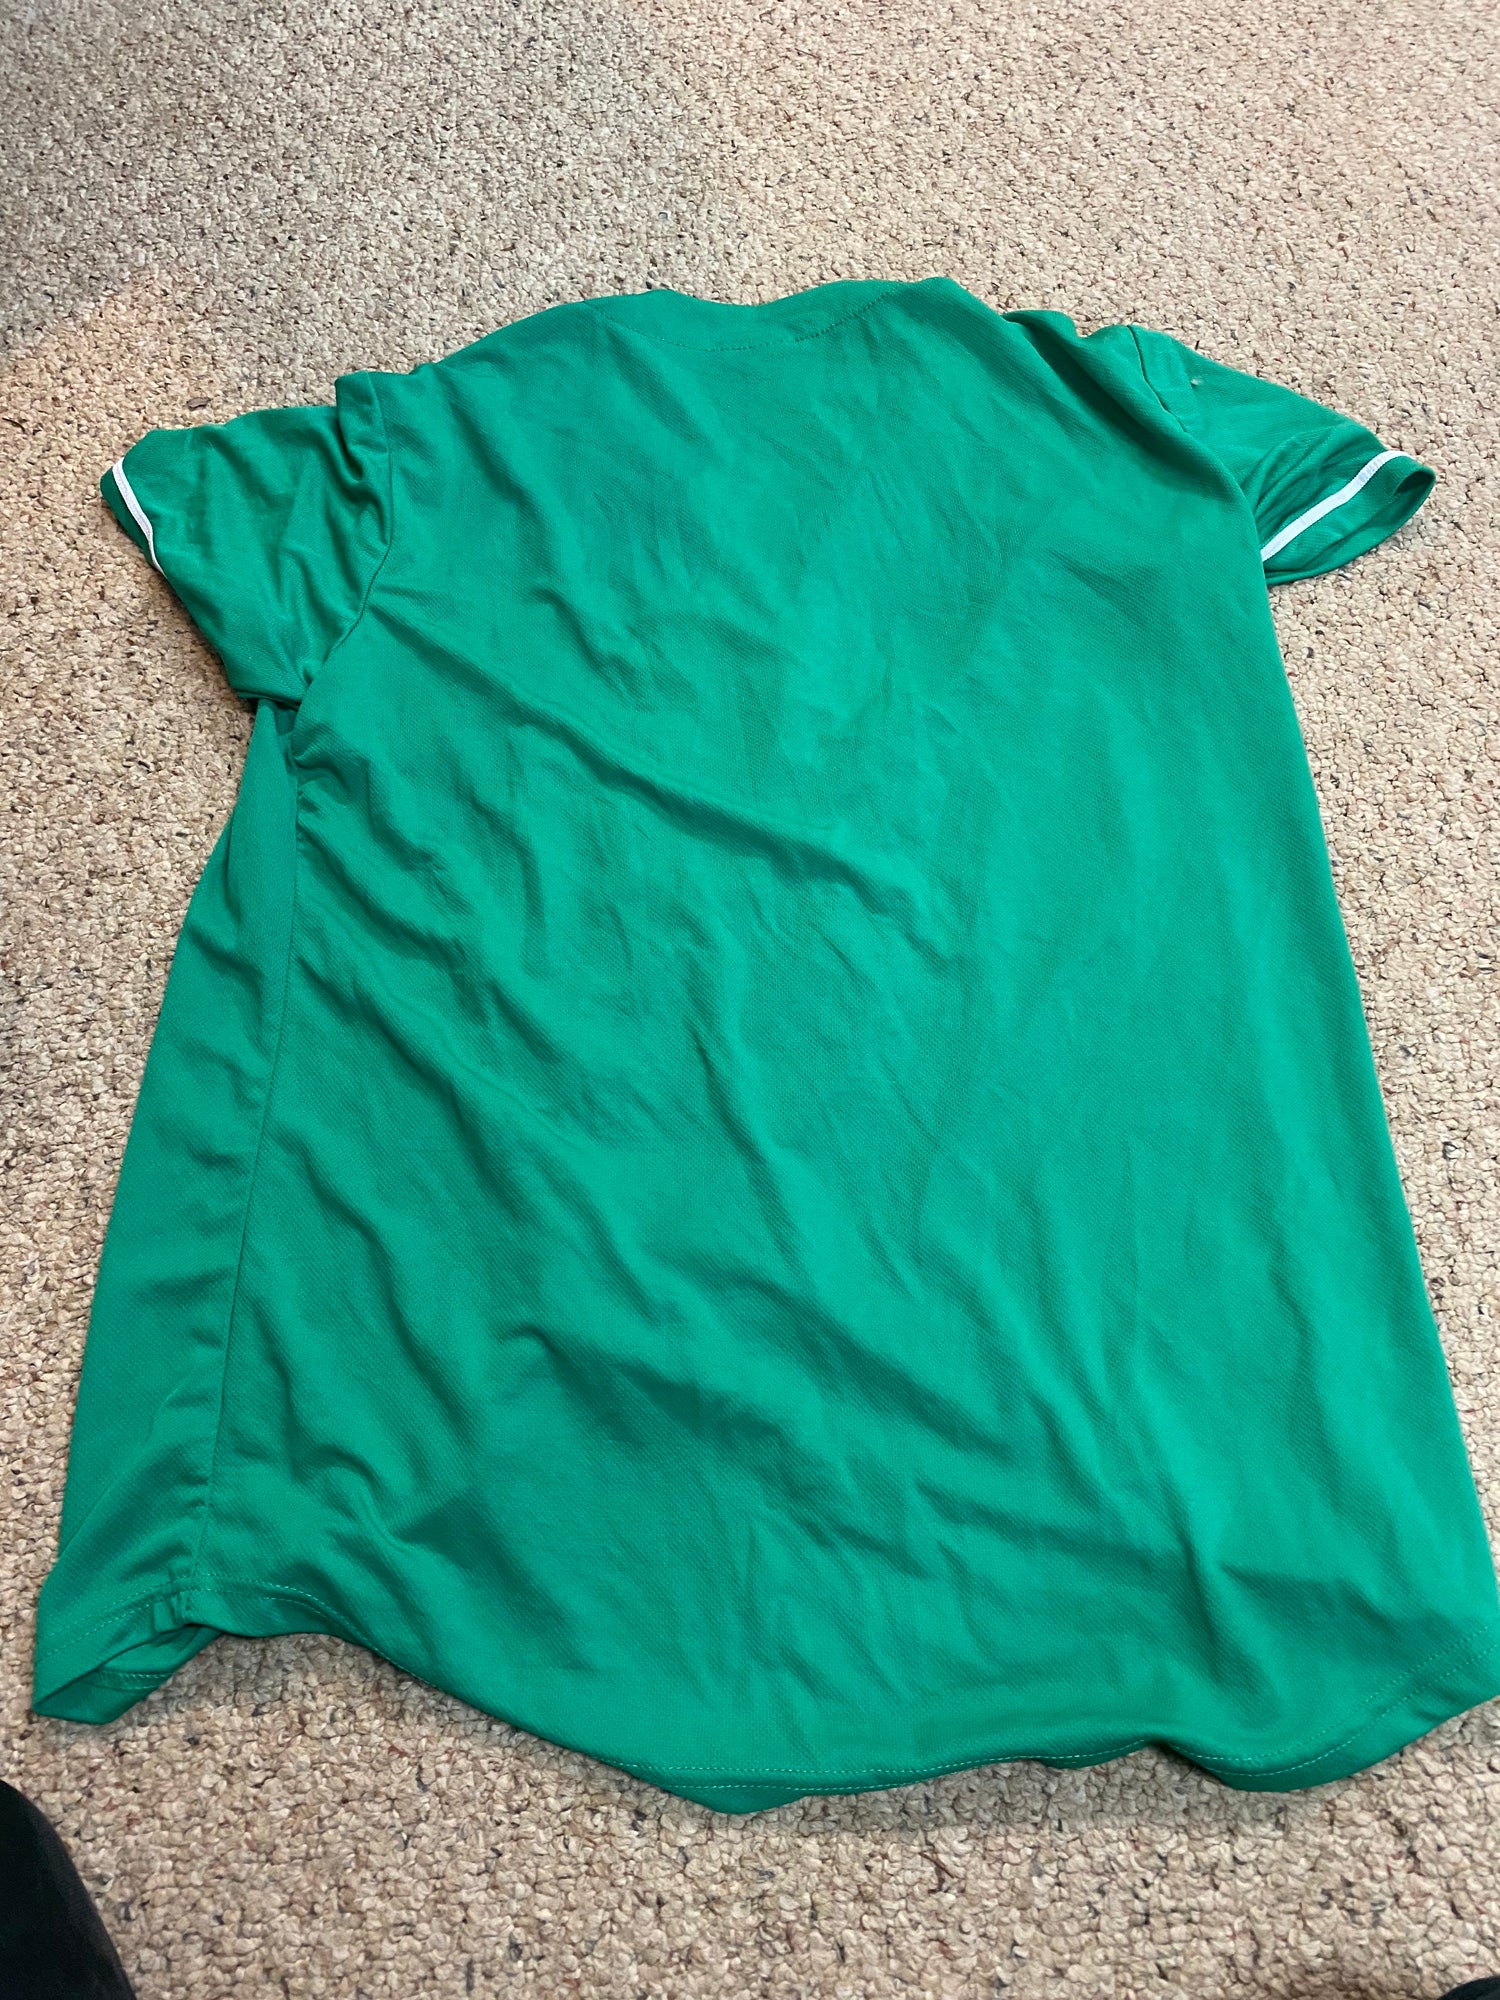  Majestic Philadelphia Phillies St. Patrick's Day Adult Short  Sleeve Performance Shirt - Green : Sports & Outdoors